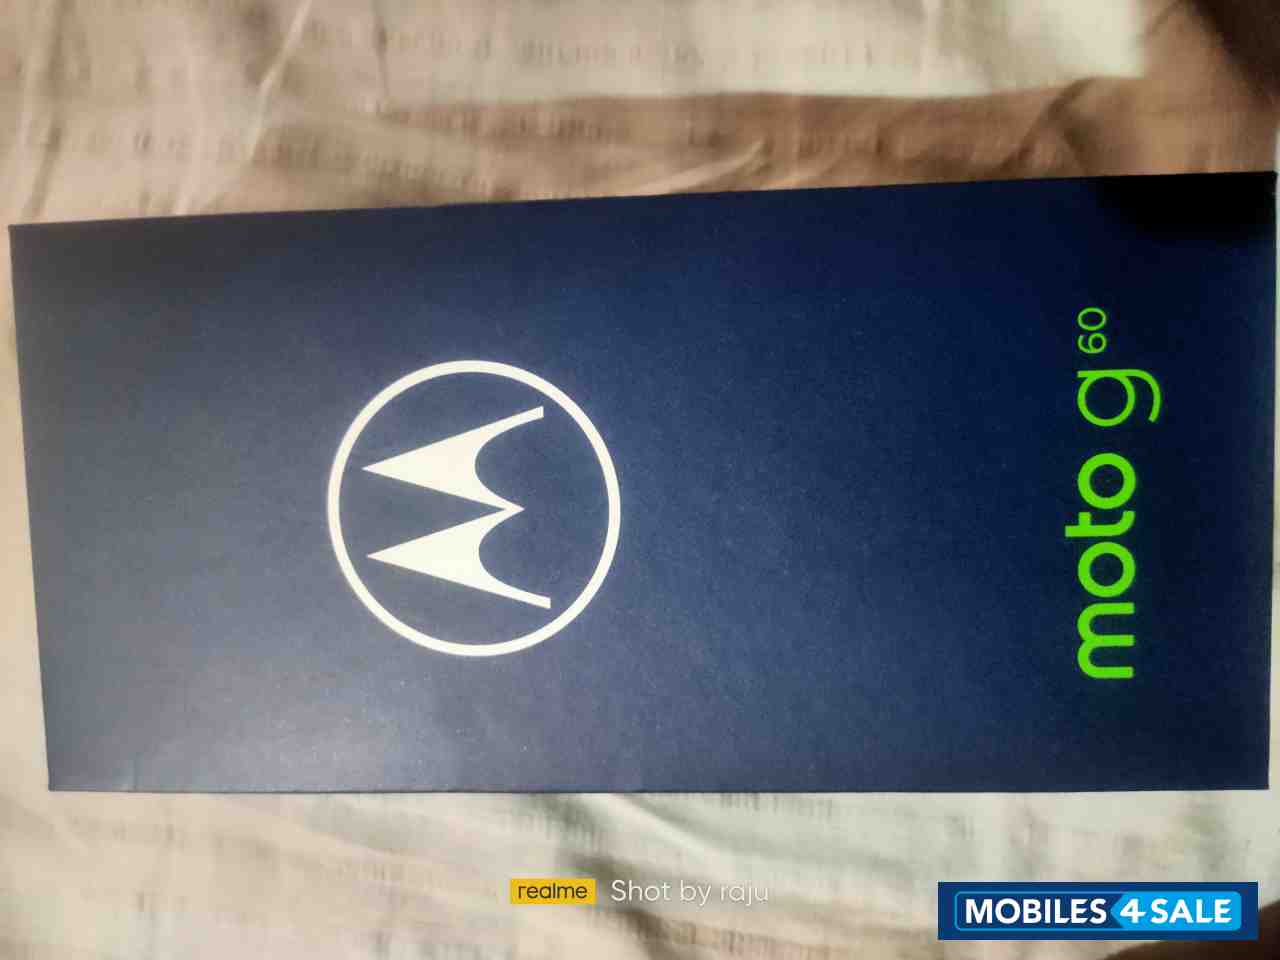 Motorola  Moto g 60